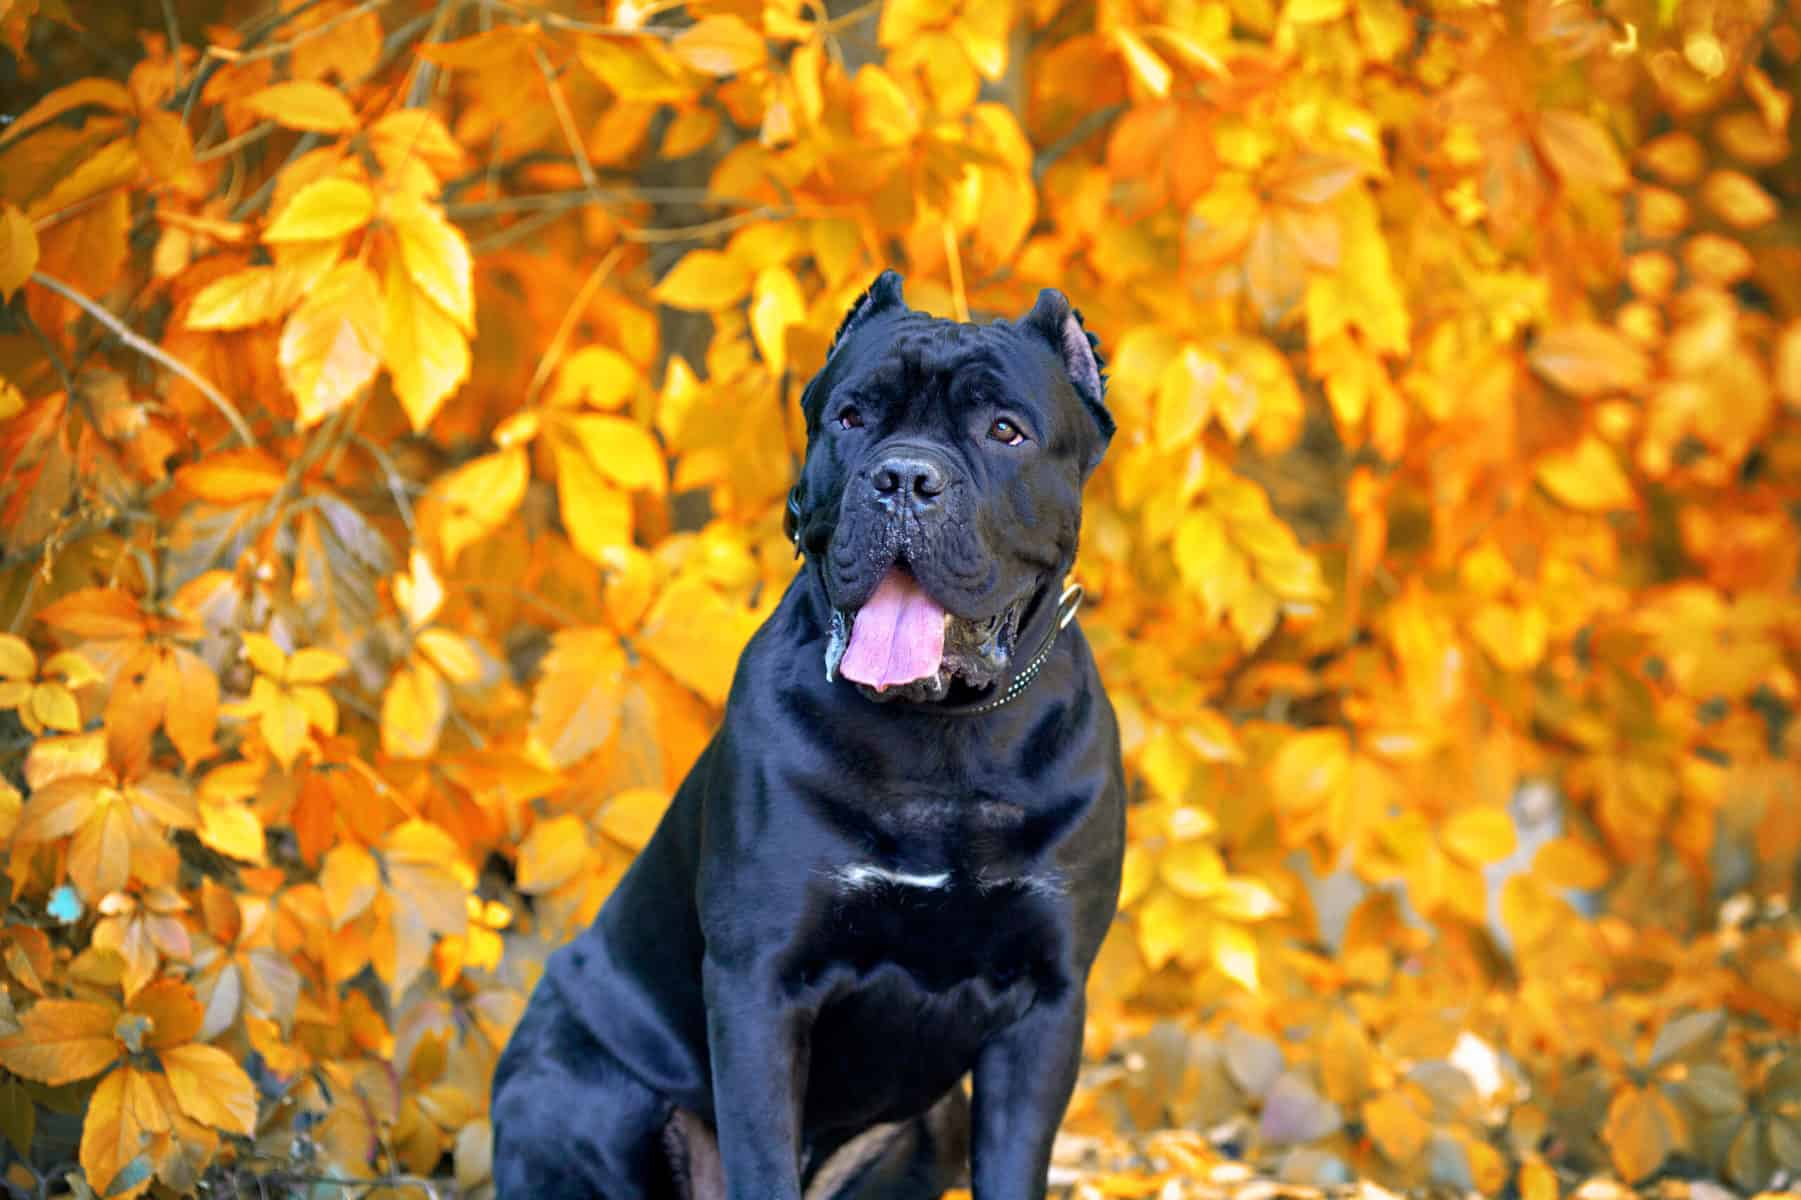 Cane Corso Italiano dog portrait against autumn leaves background